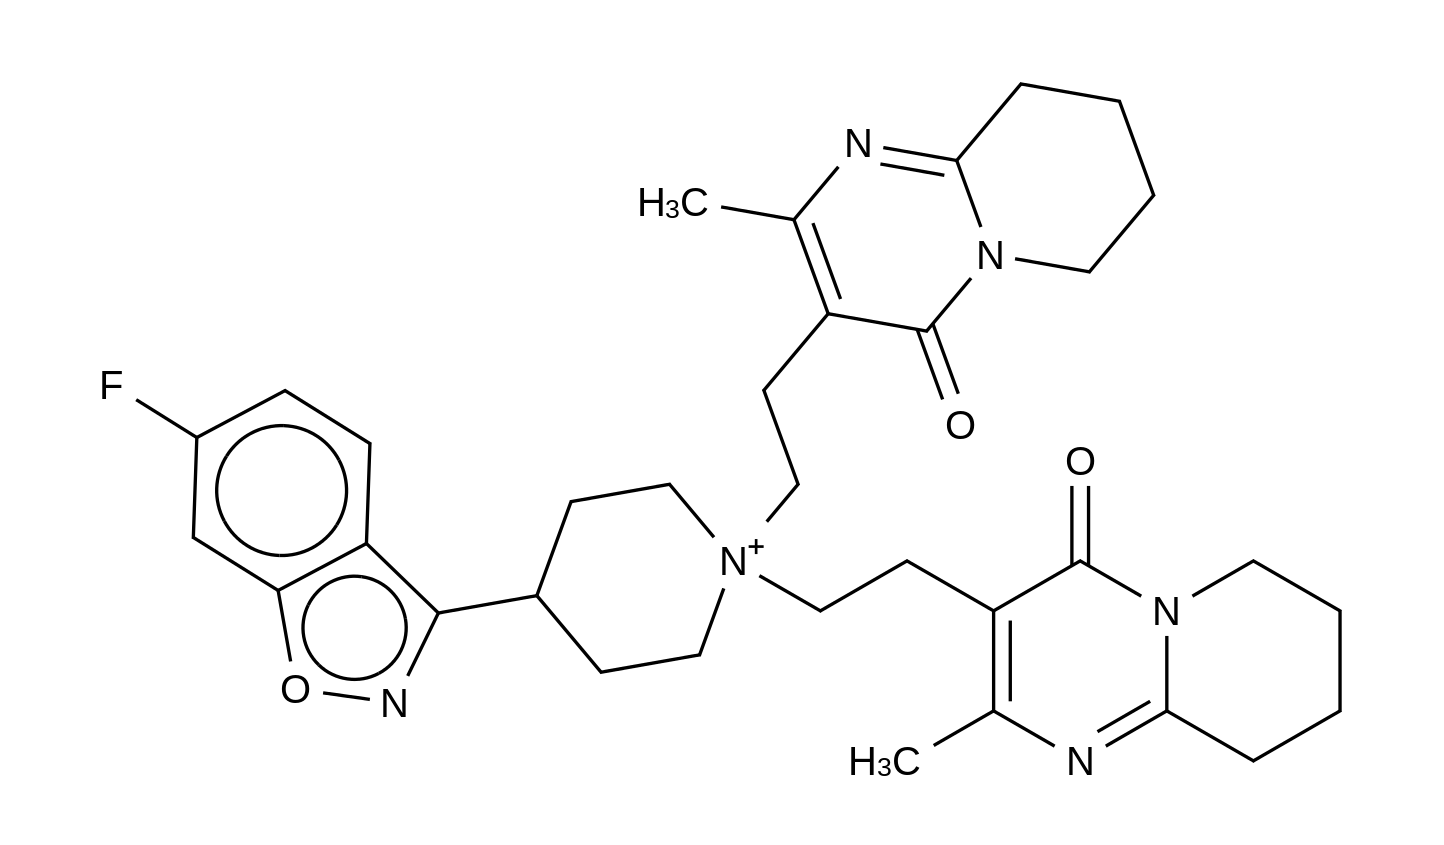 6-Fluoro-3-[1-bis-[2-(methyl-6,7,8,9-tetrahydropyridol[1,2,a]pyrimidin-4-one-3-yl)ethyl]piperidinium]benzisoxazole (Risperidone Impurity)